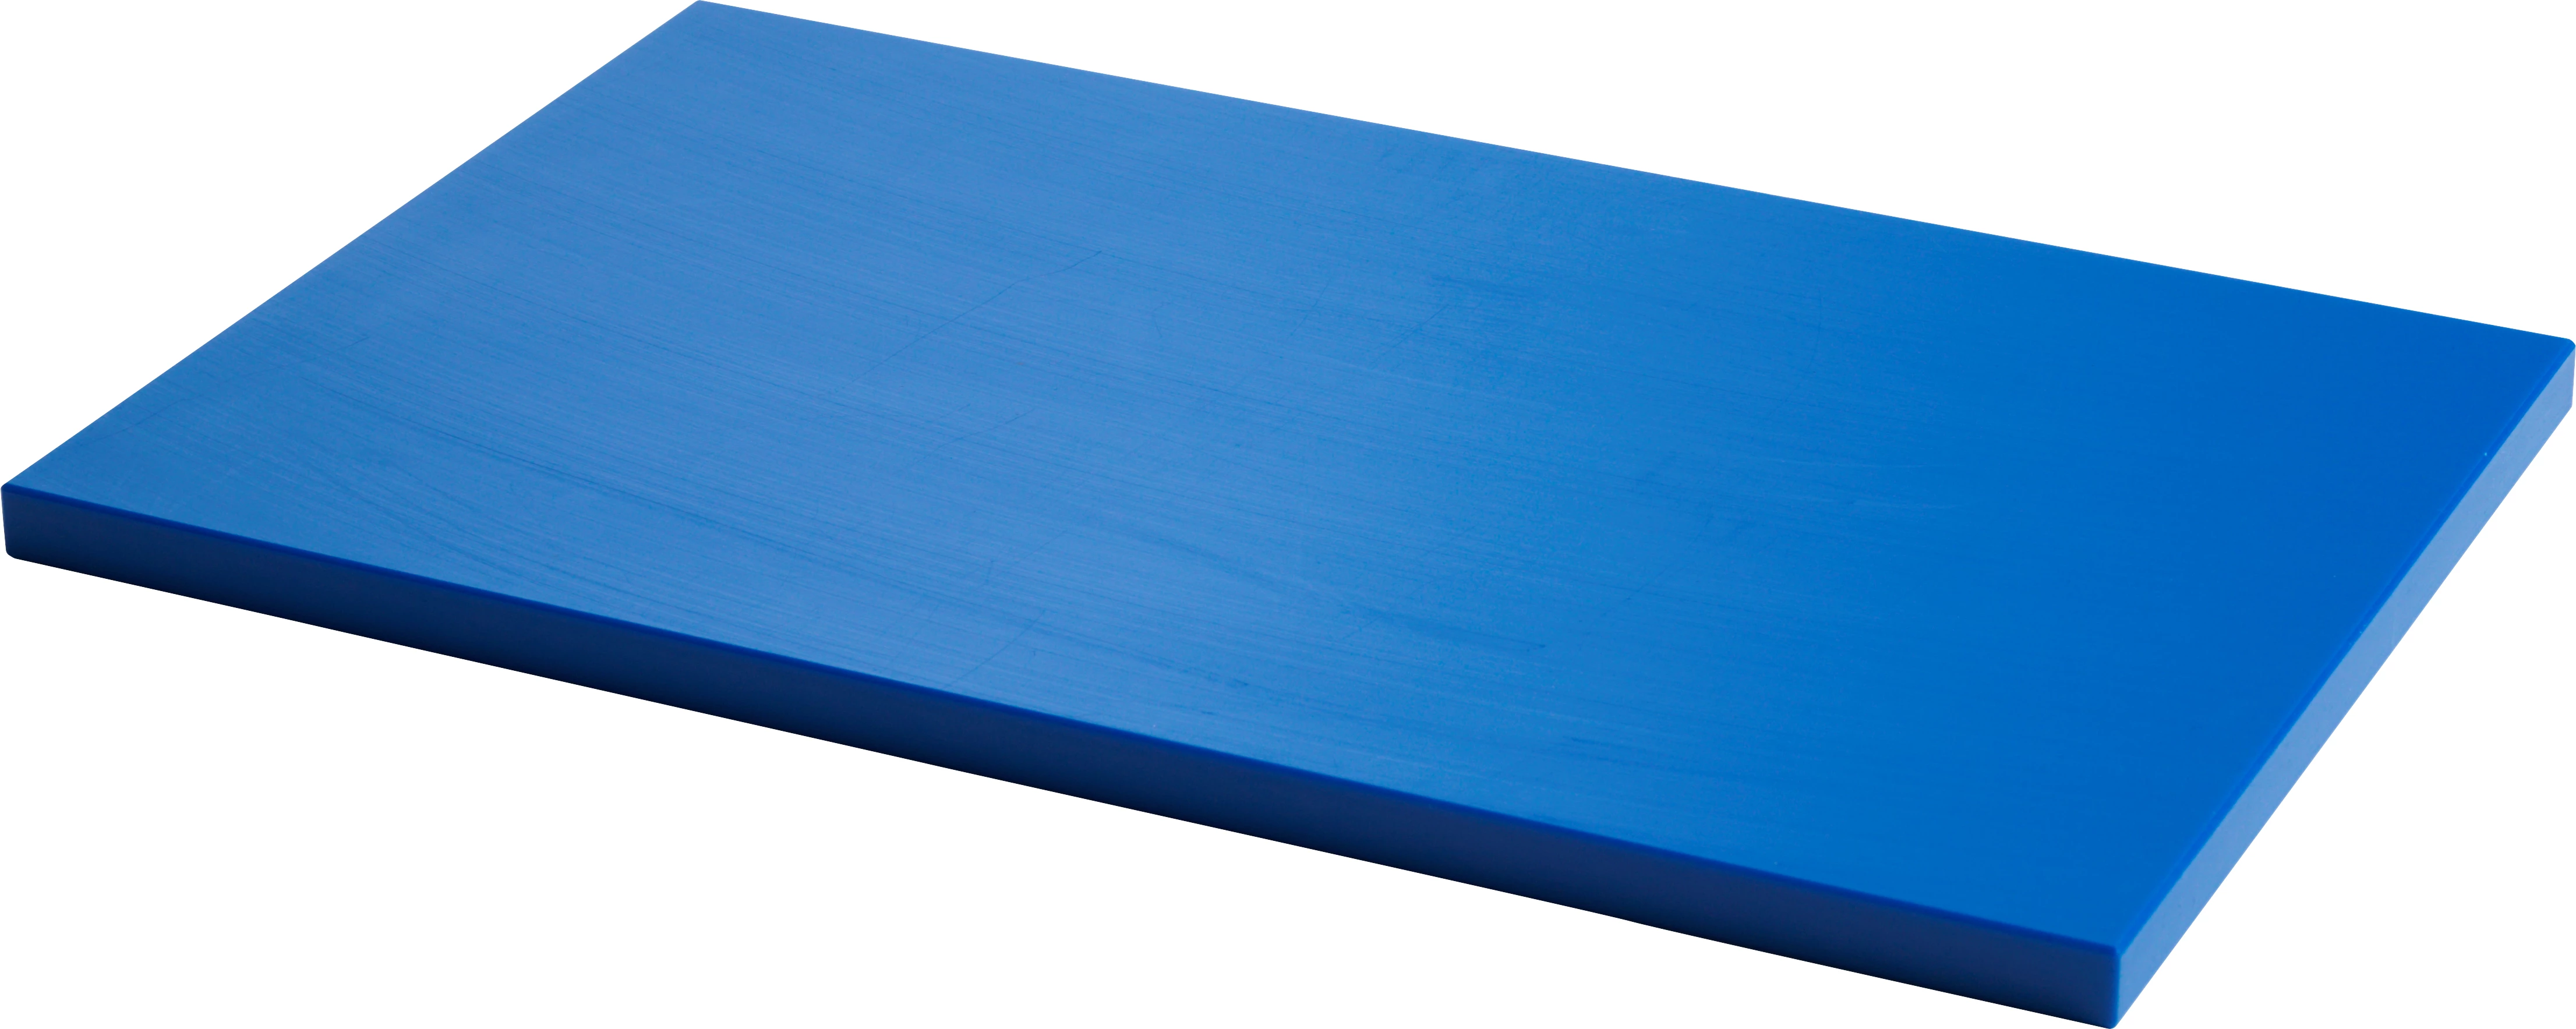 Euroboard skæreplanke, blå, 40 x 25 x 1,5 cm